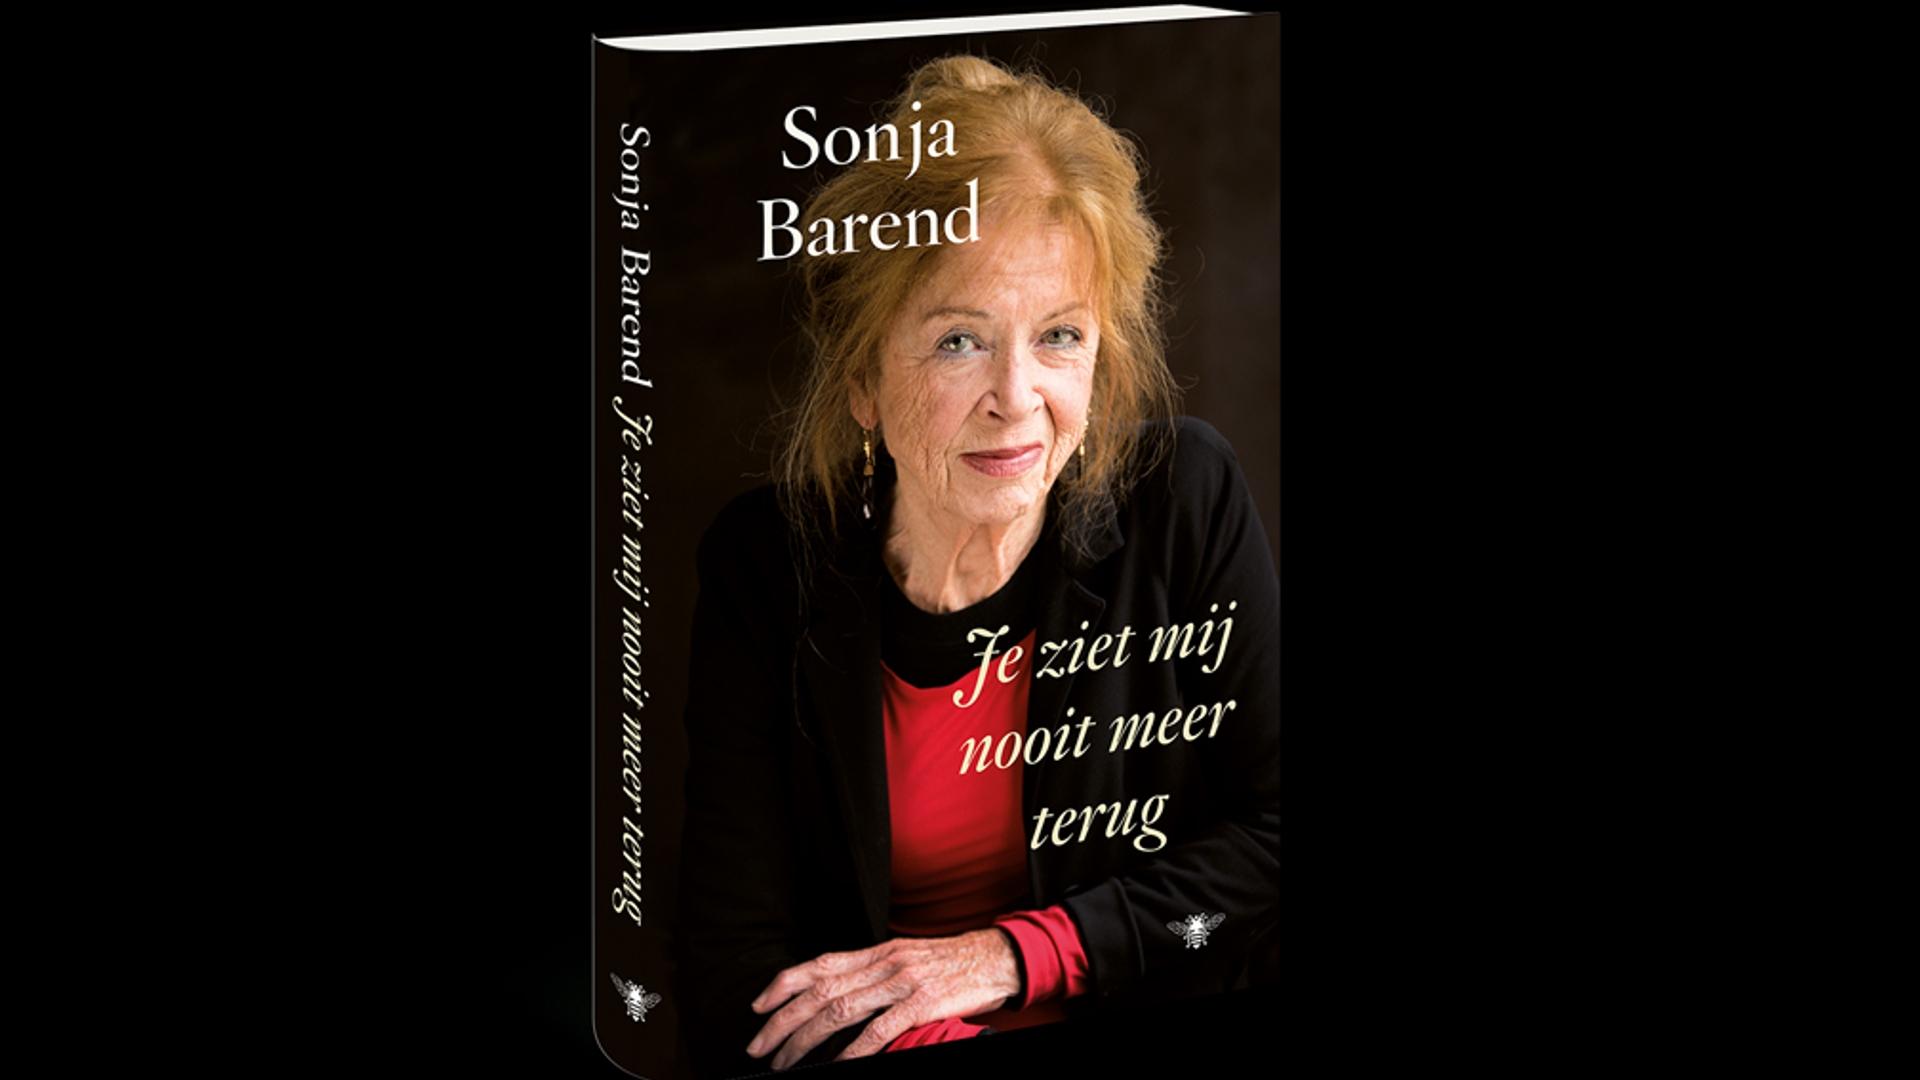 Boek Sonja Barend